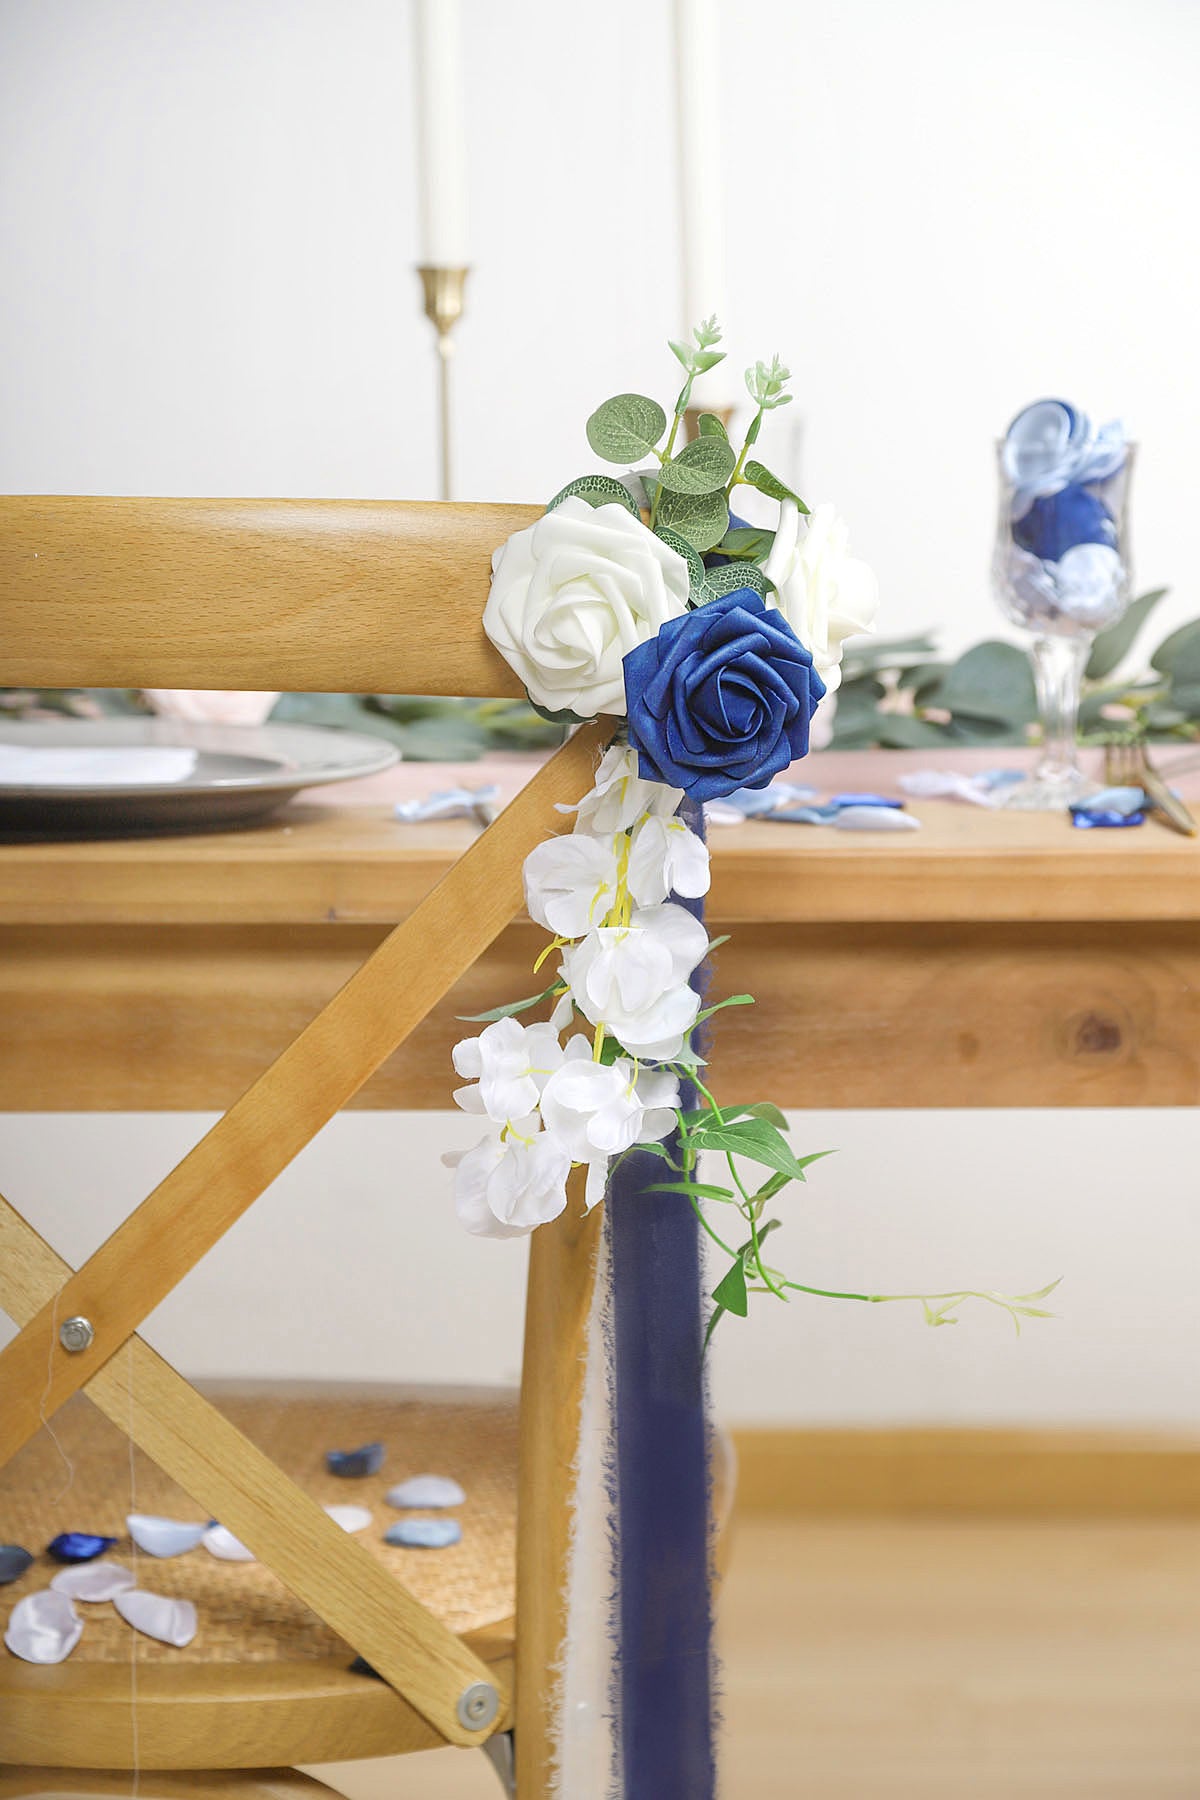 Handmade Wedding Aisle Decorations Chair Flowers Set of 8 - Royal Blue